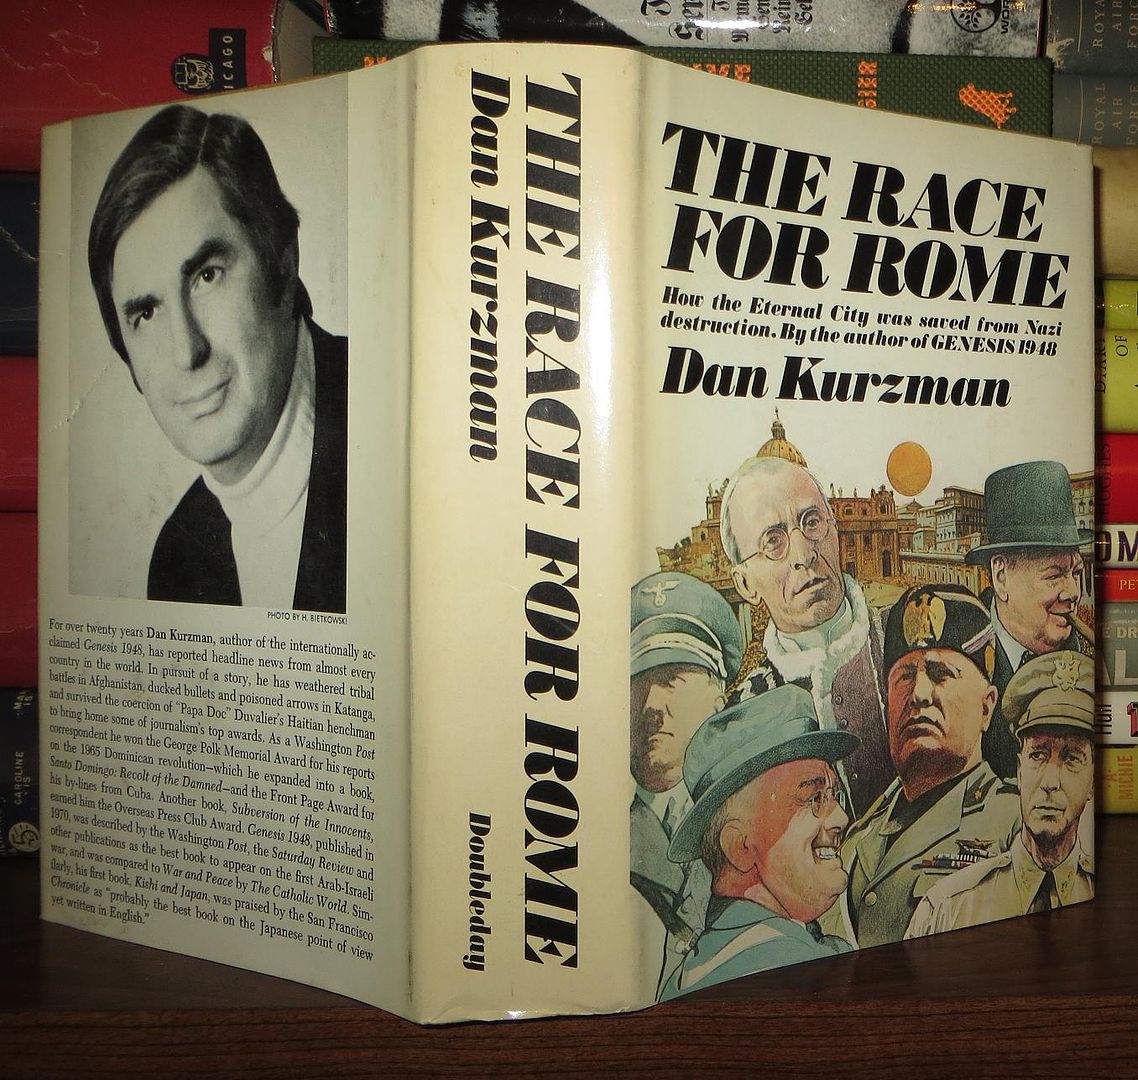 KURZMAN, DAN - The Race for Rome